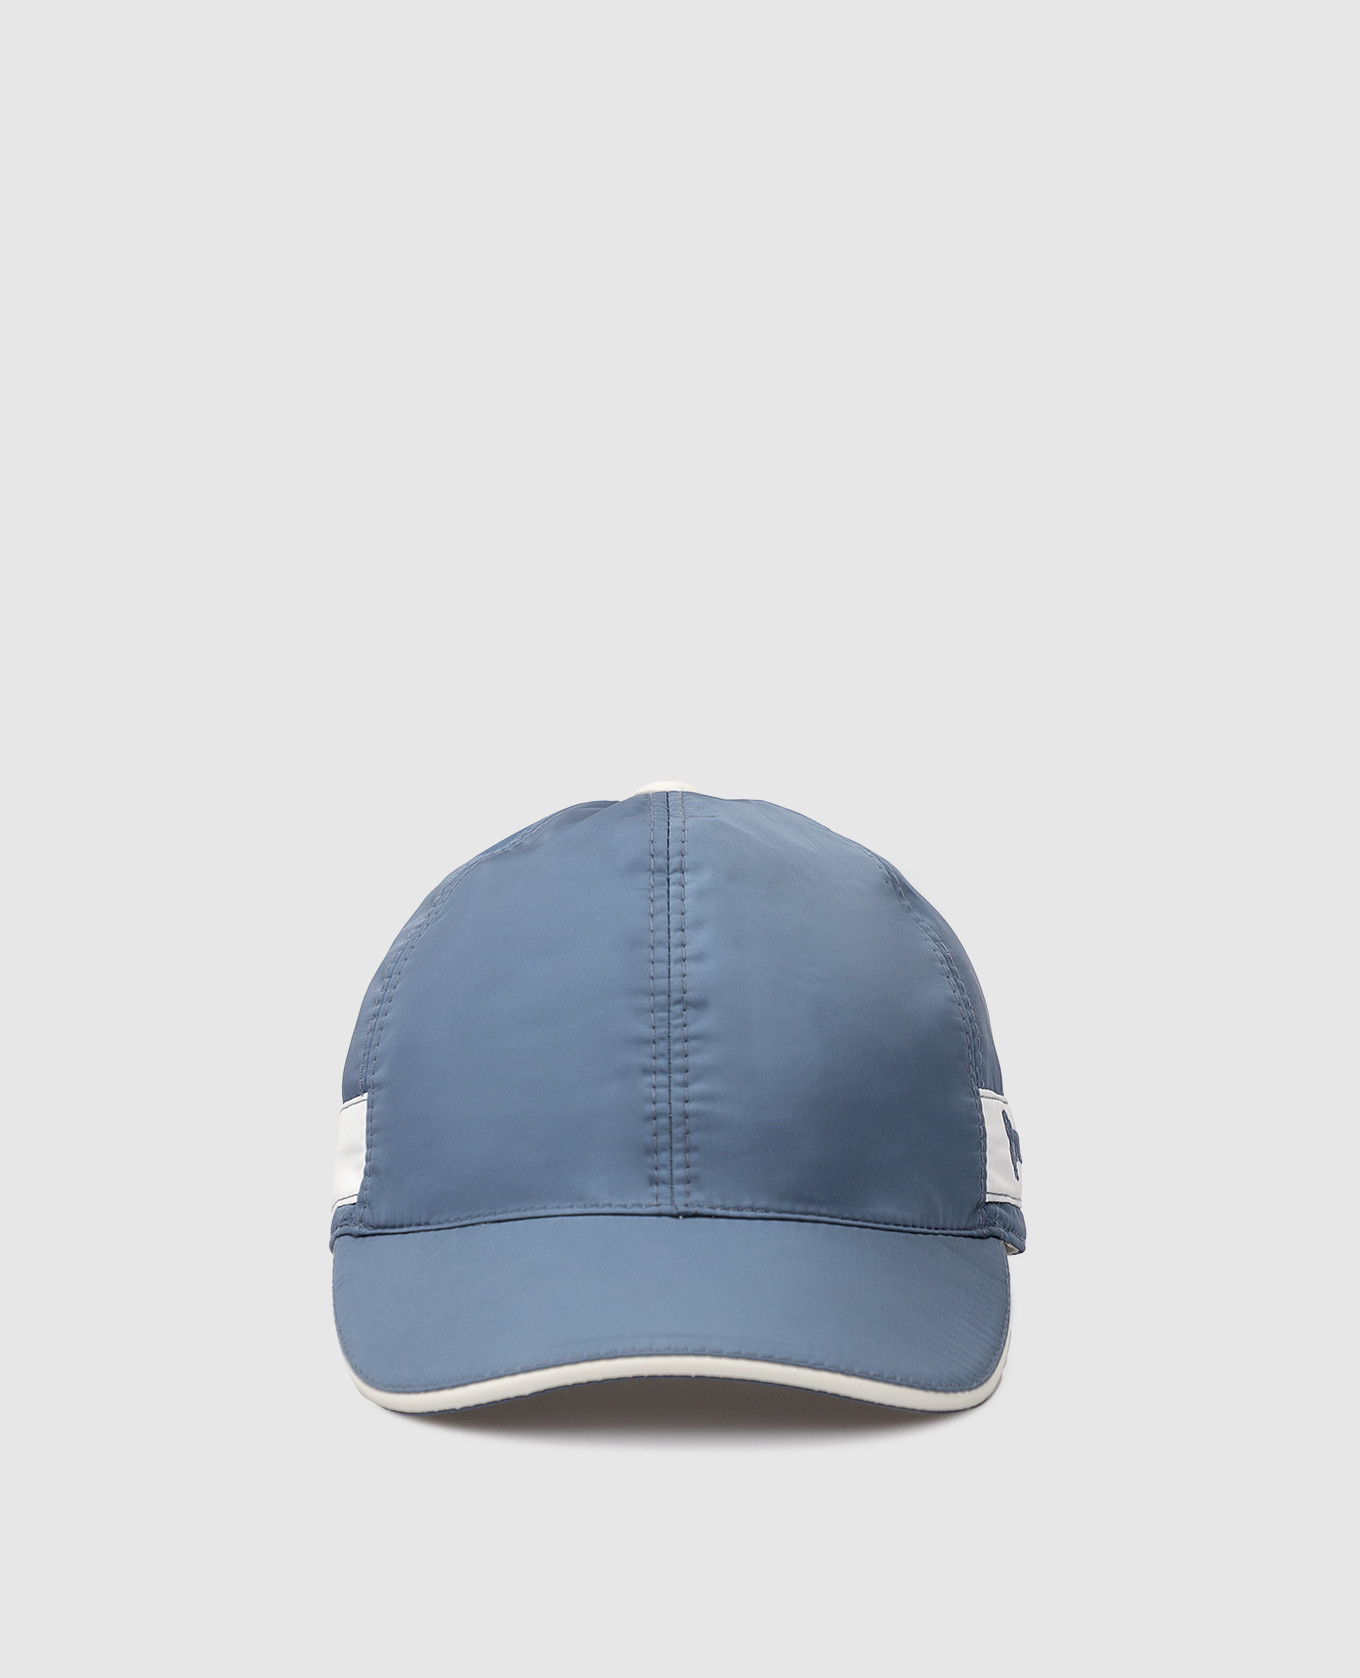 Children's blue cap with logo